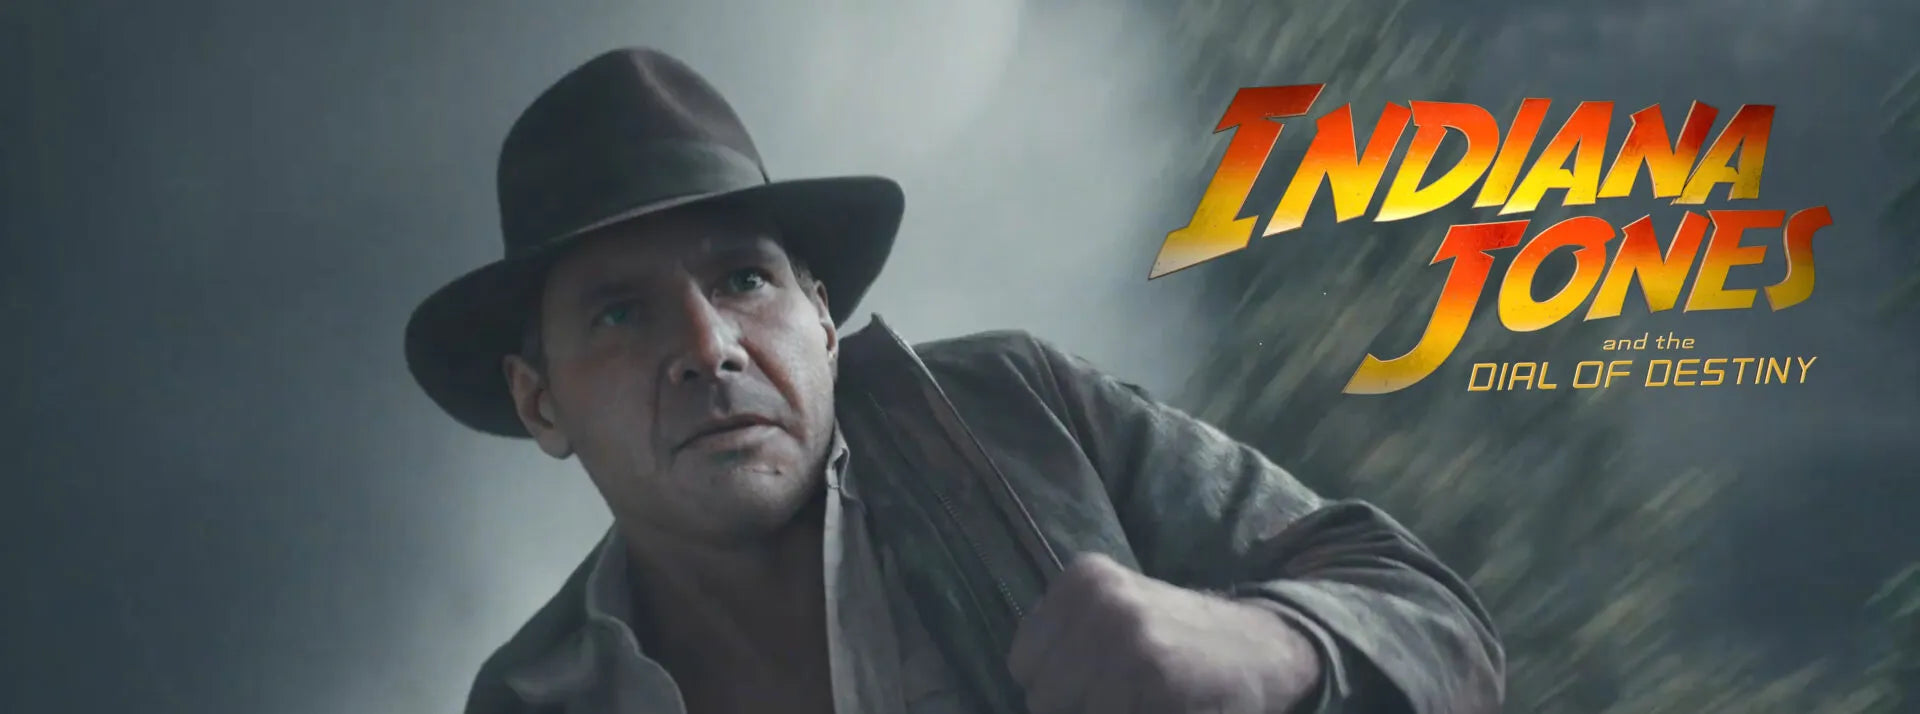 Indiana Jones Hat New Movie the Dial of Destiny